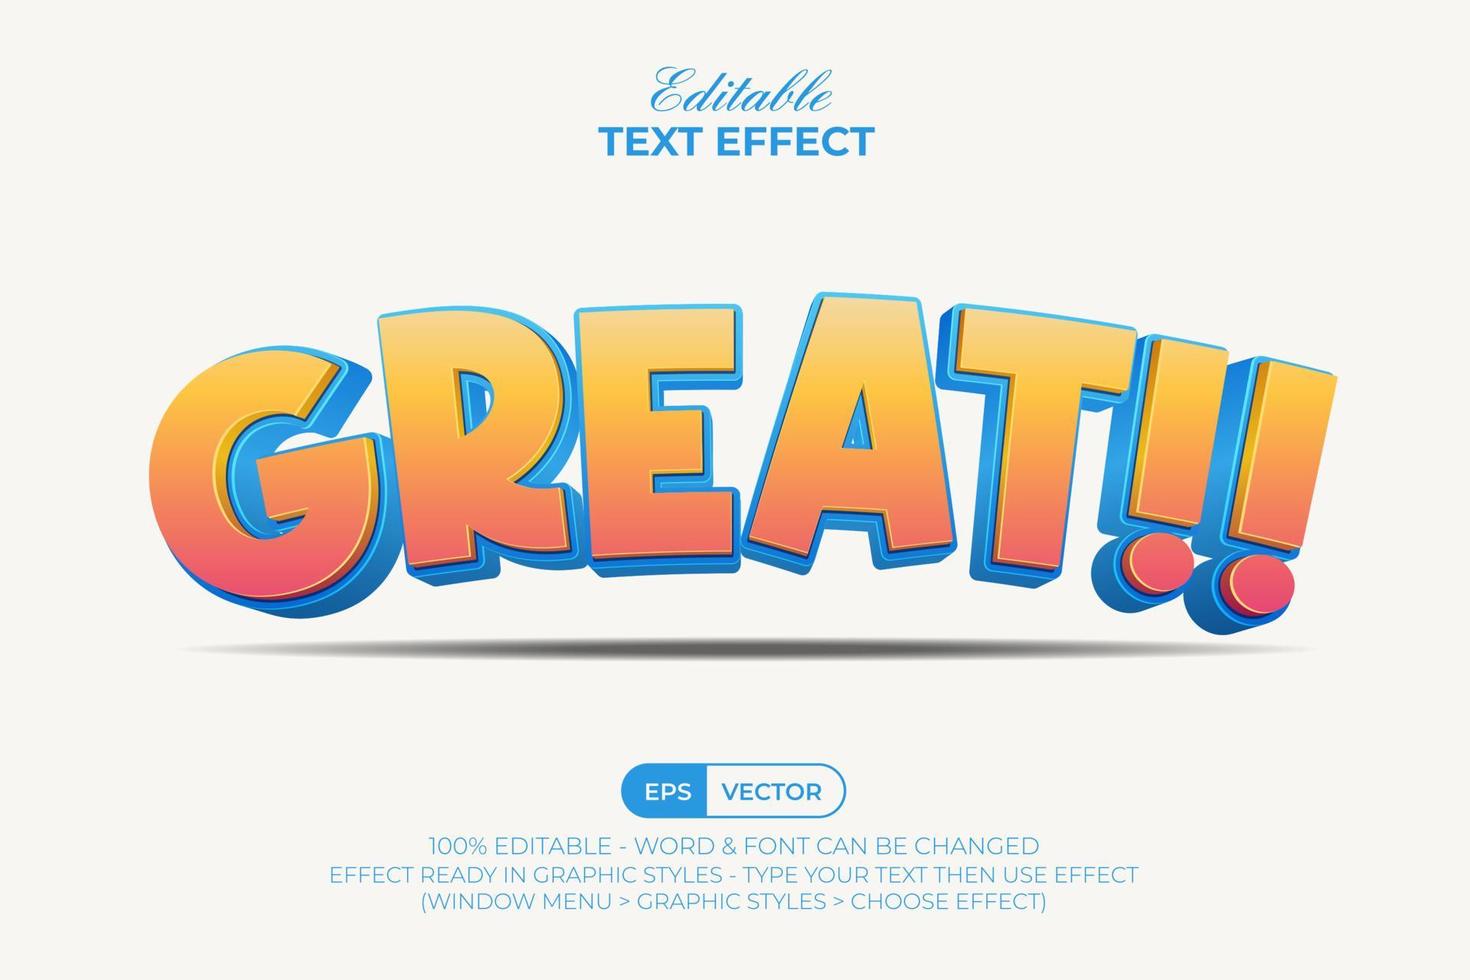 ótimo estilo de efeito de texto 3d cor amarela e azul. estilo curvo de efeito de texto editável. vetor